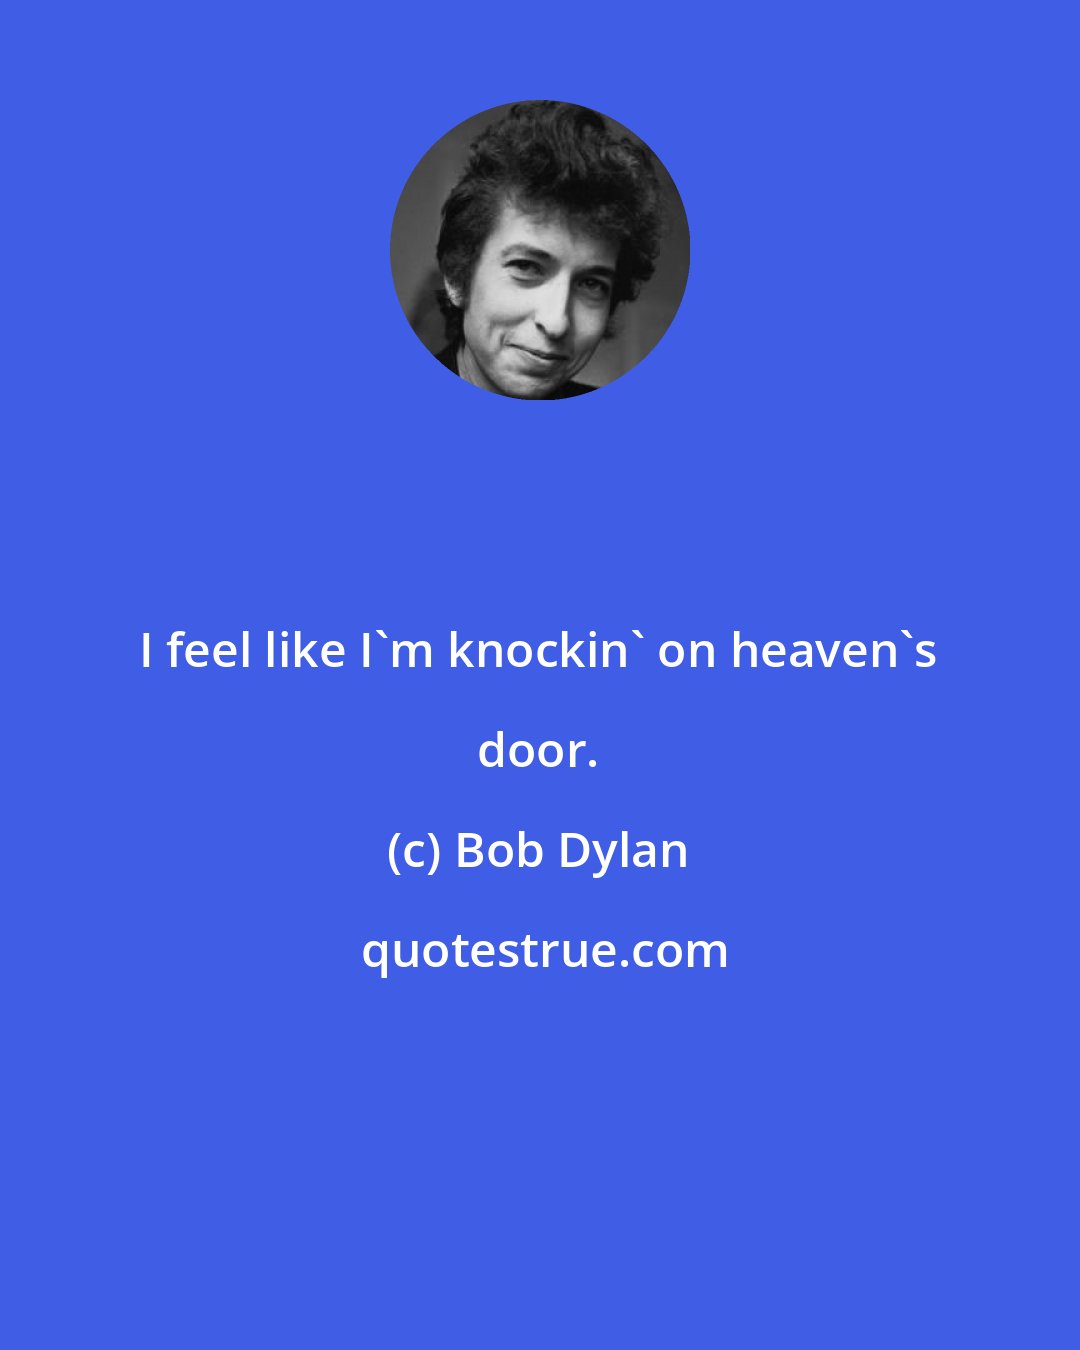 Bob Dylan: I feel like I'm knockin' on heaven's door.